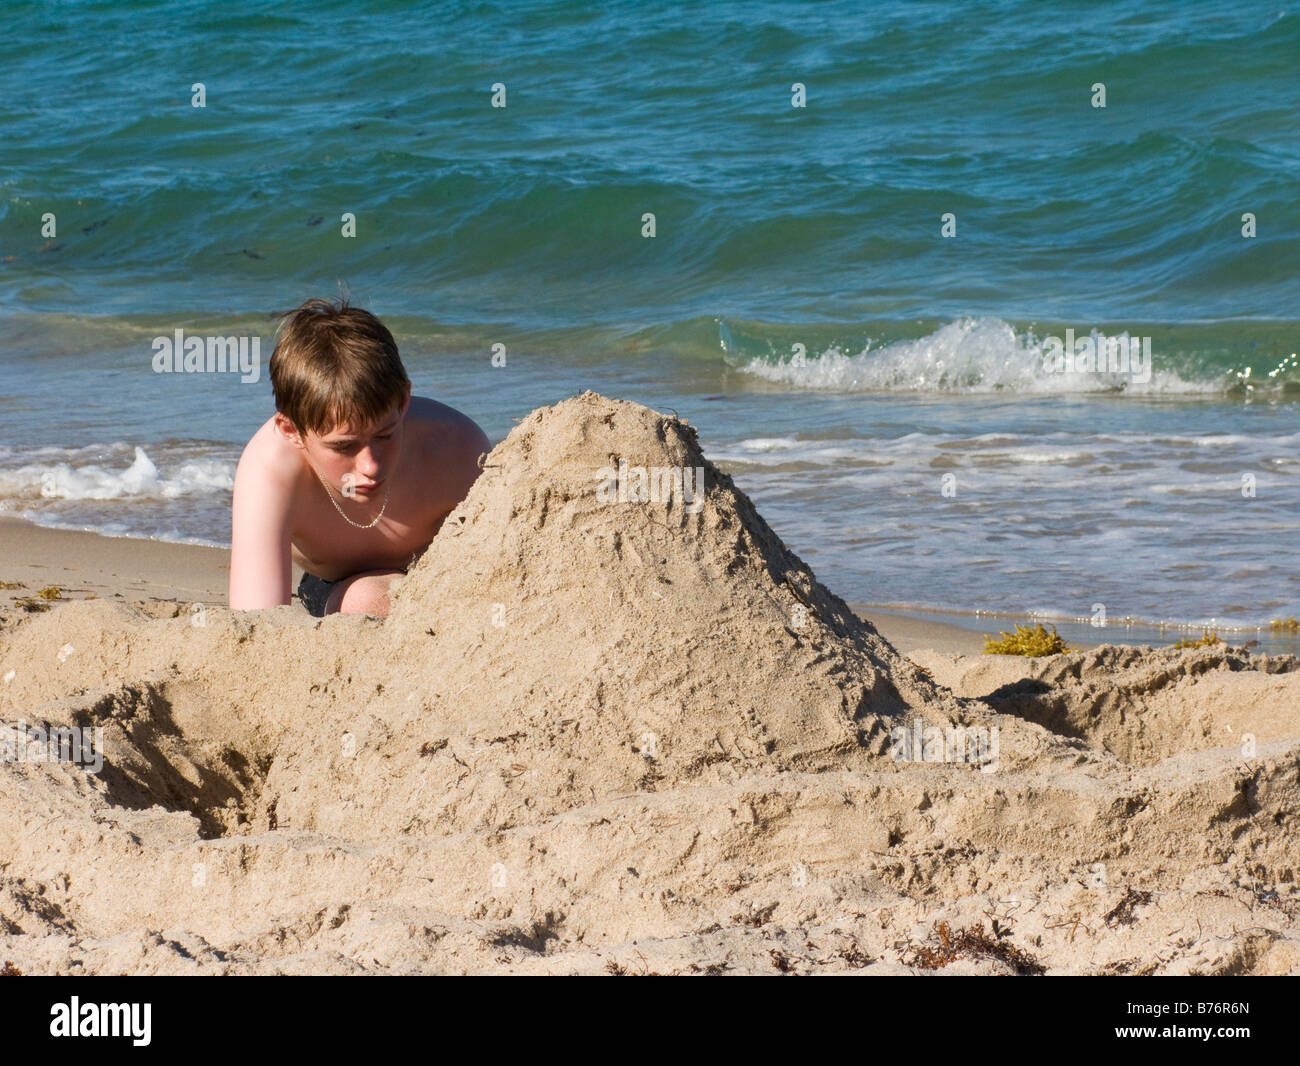 Young boy building sandcastle on beach, Florida, USA Stock Photo